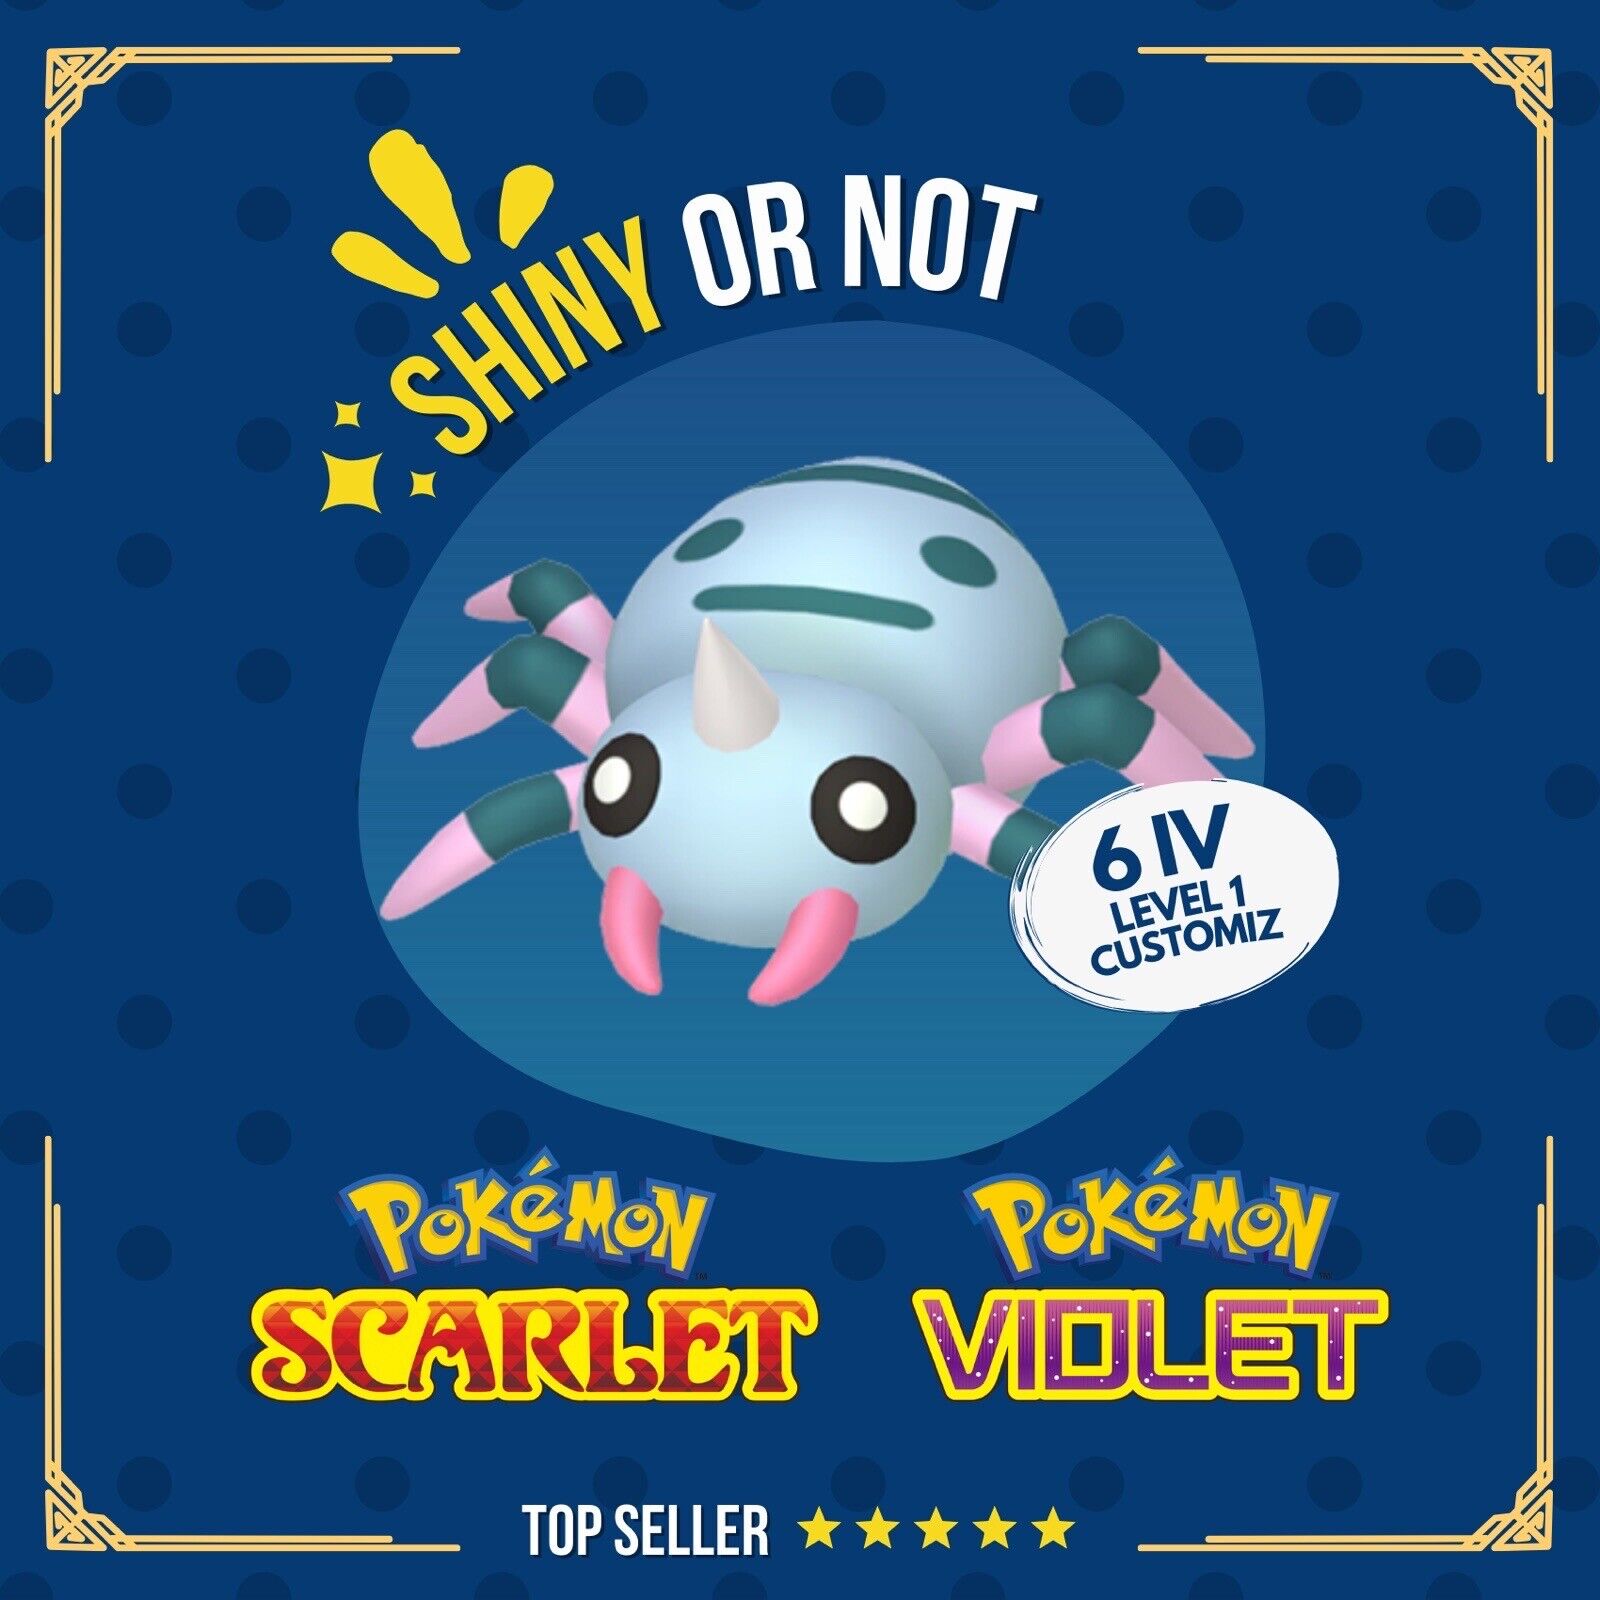 Spinarak Shiny or Non ✨ 6 IV Customizable Nature Level OT Pokémon Scarlet Violet by Shiny Living Dex | Shiny Living Dex